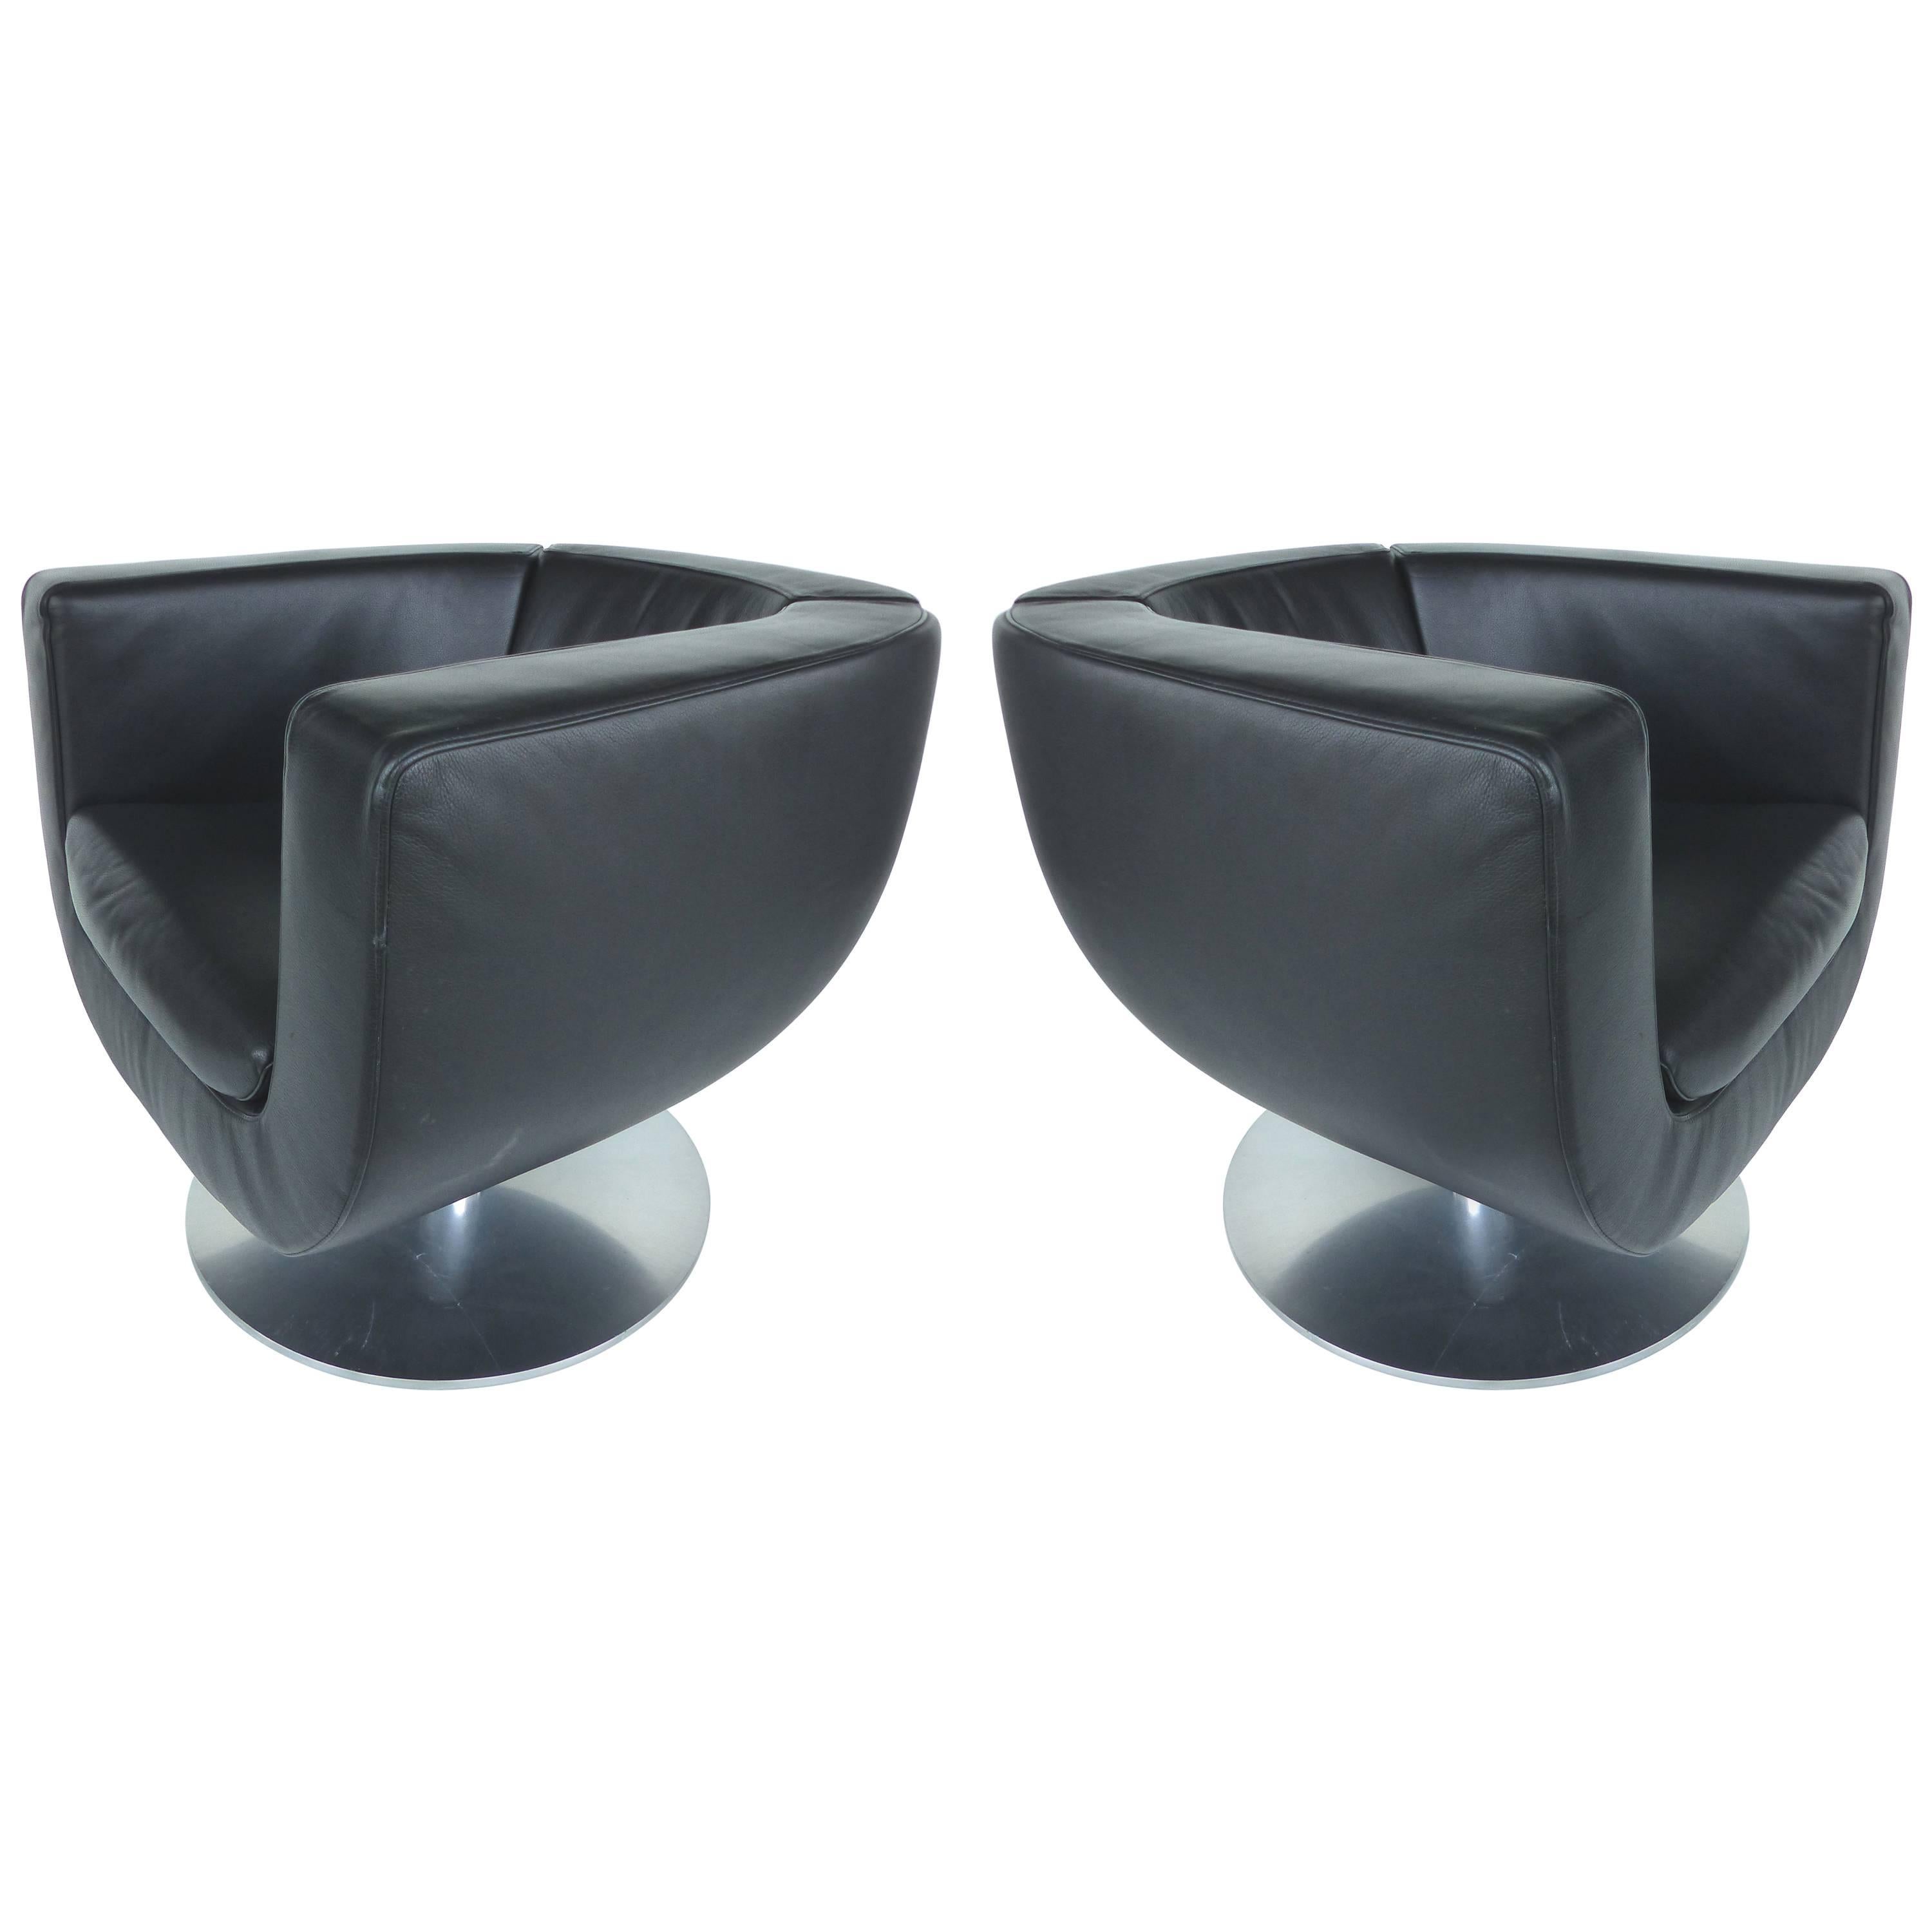 Jeffery Bernett B&B Italia Leather Tulip Swivel Chairs, Early 21st Century, Pair